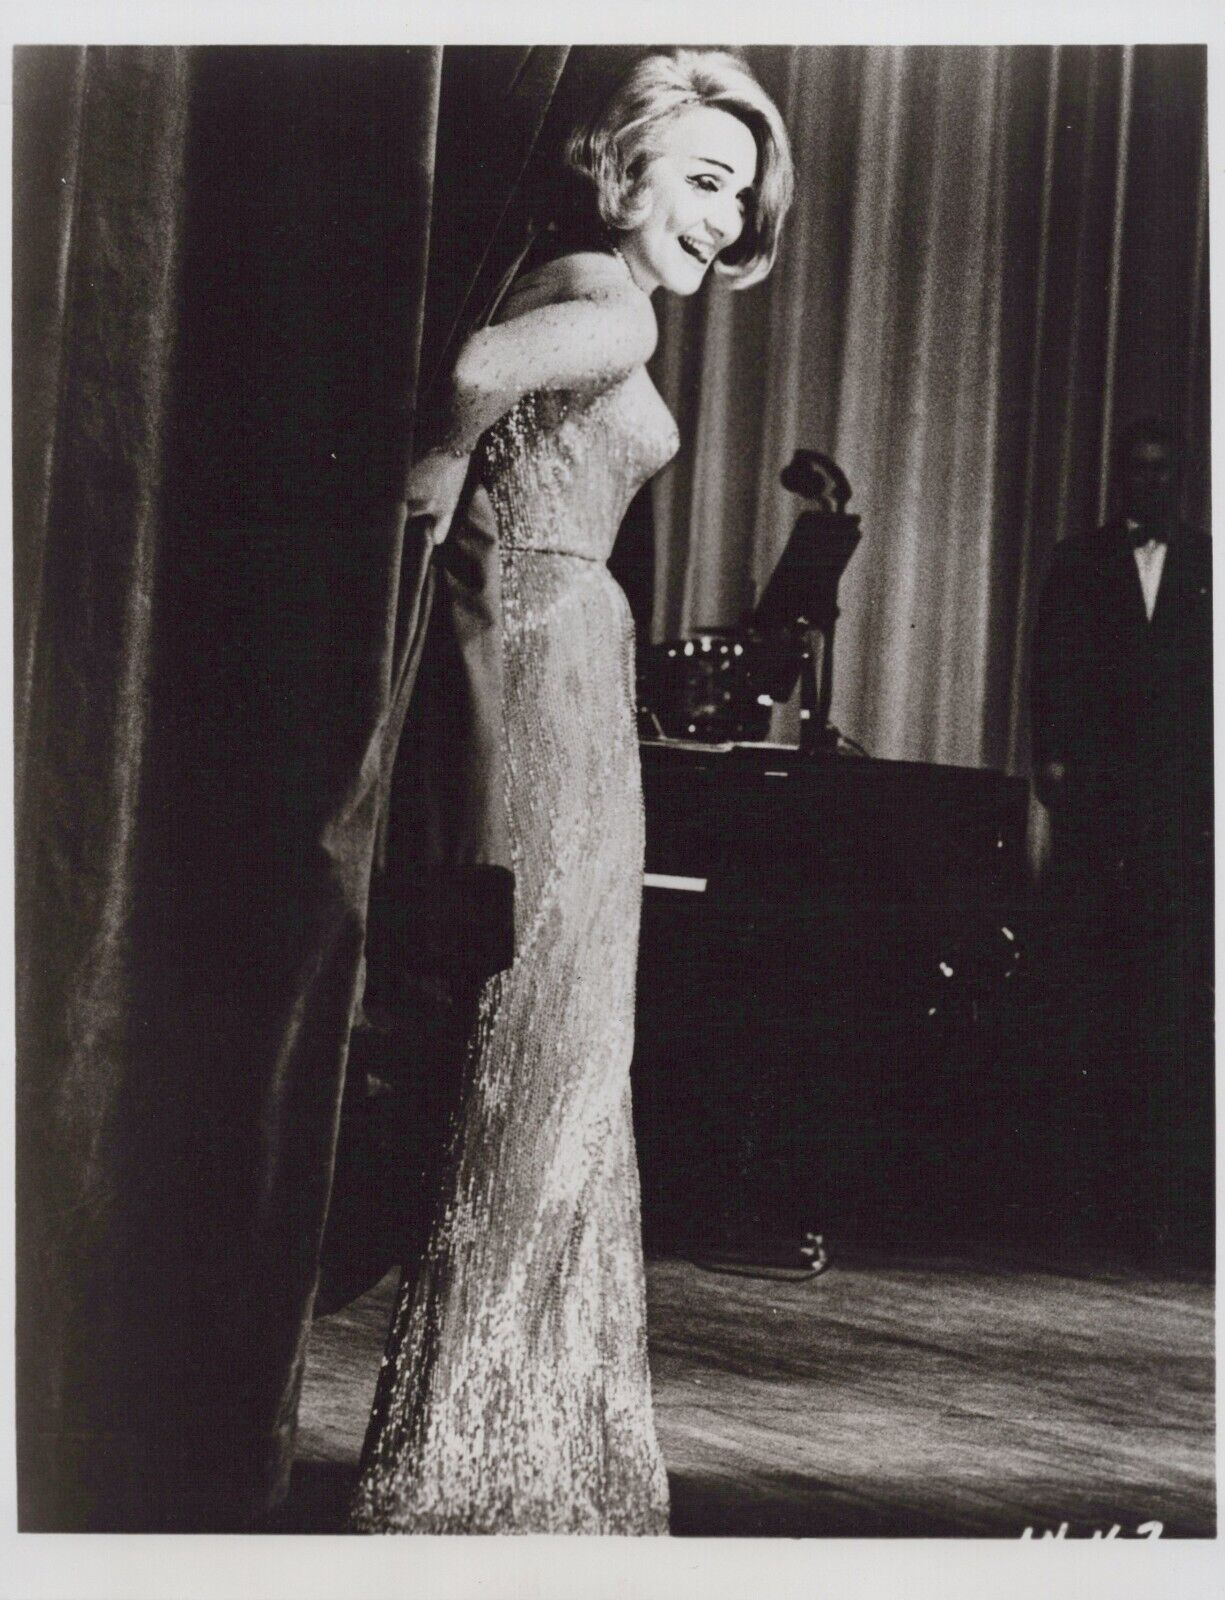 HOLLYWOOD BEAUTY MARLENE DIETRICH STYLISH POSE STUNNING PORTRAIT 1950s Photo C40